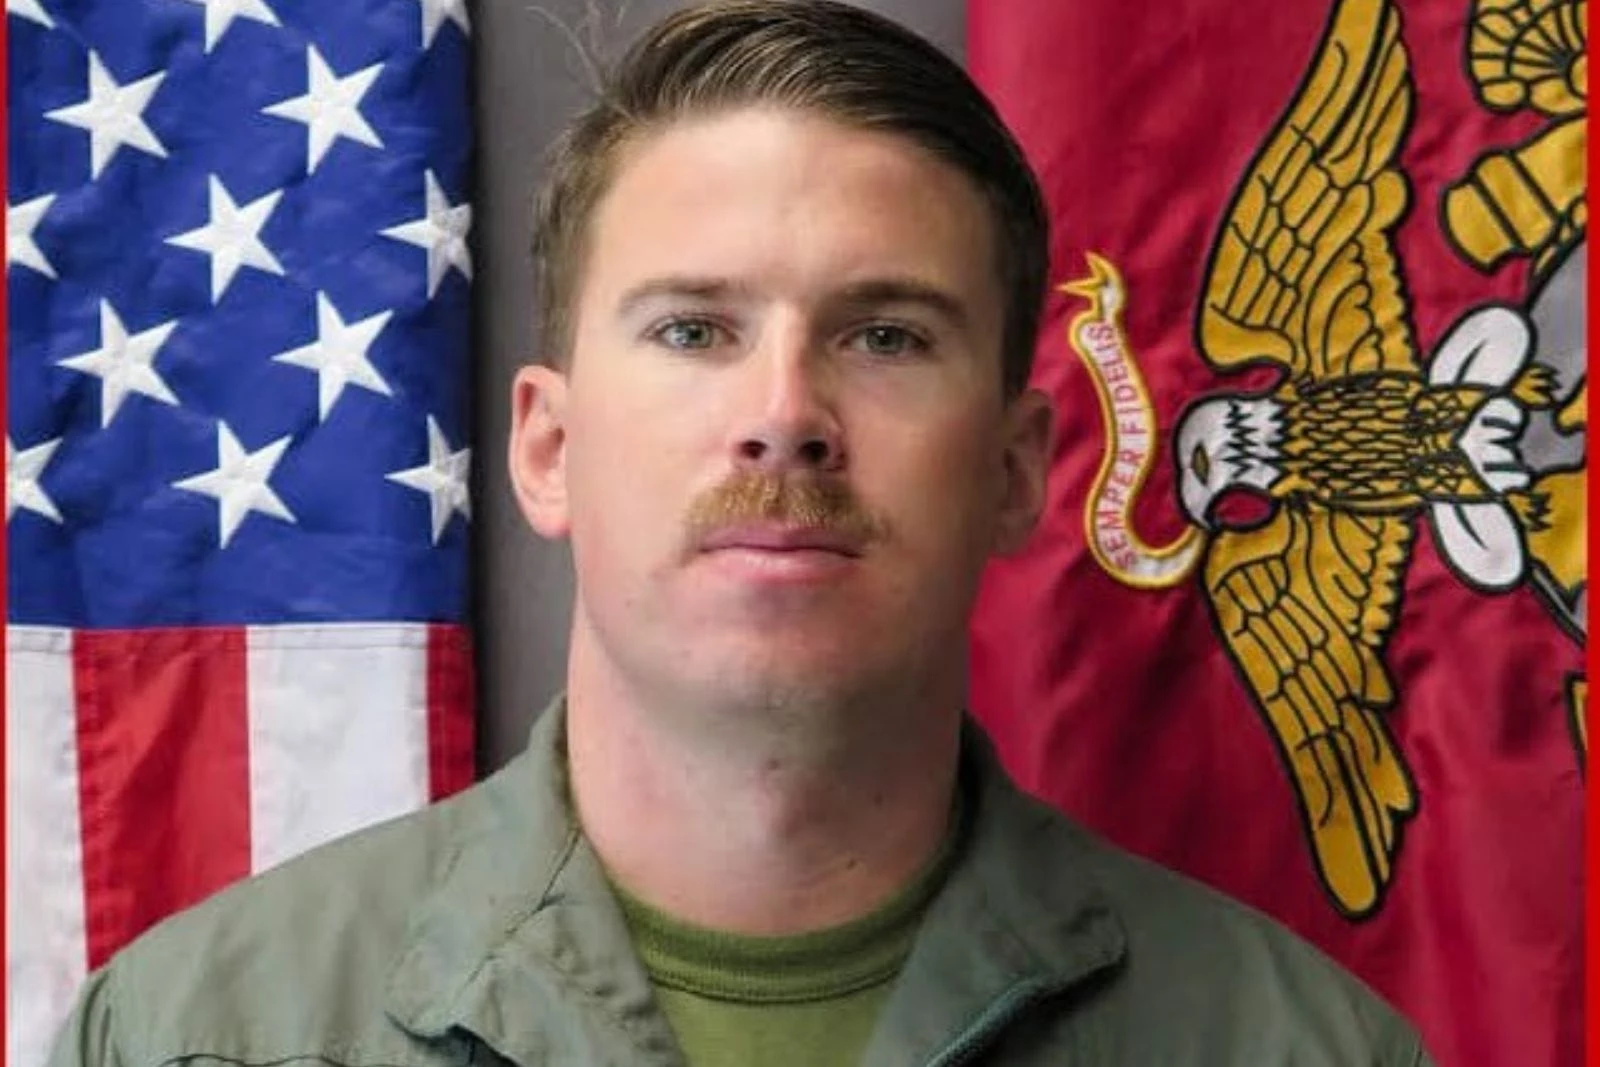 Son of ex-Dodger Steve Sax among 5 Marines killed in crash - Los